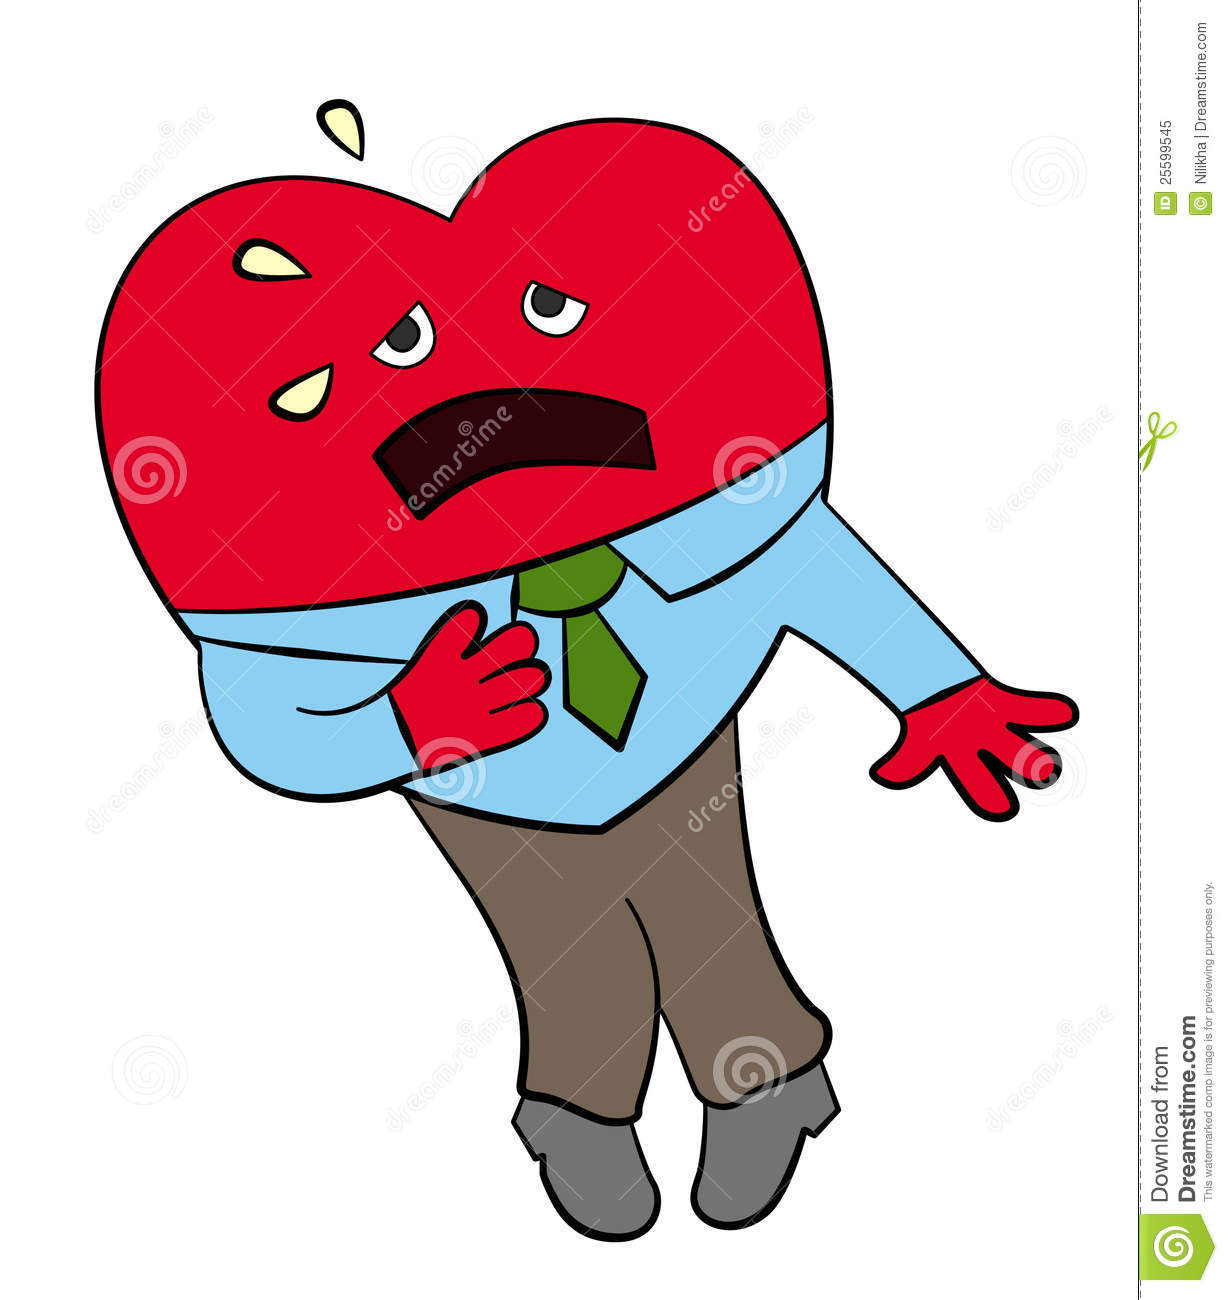 Cartoon Heart Dressed Like A Business Man Having A Heart Attack